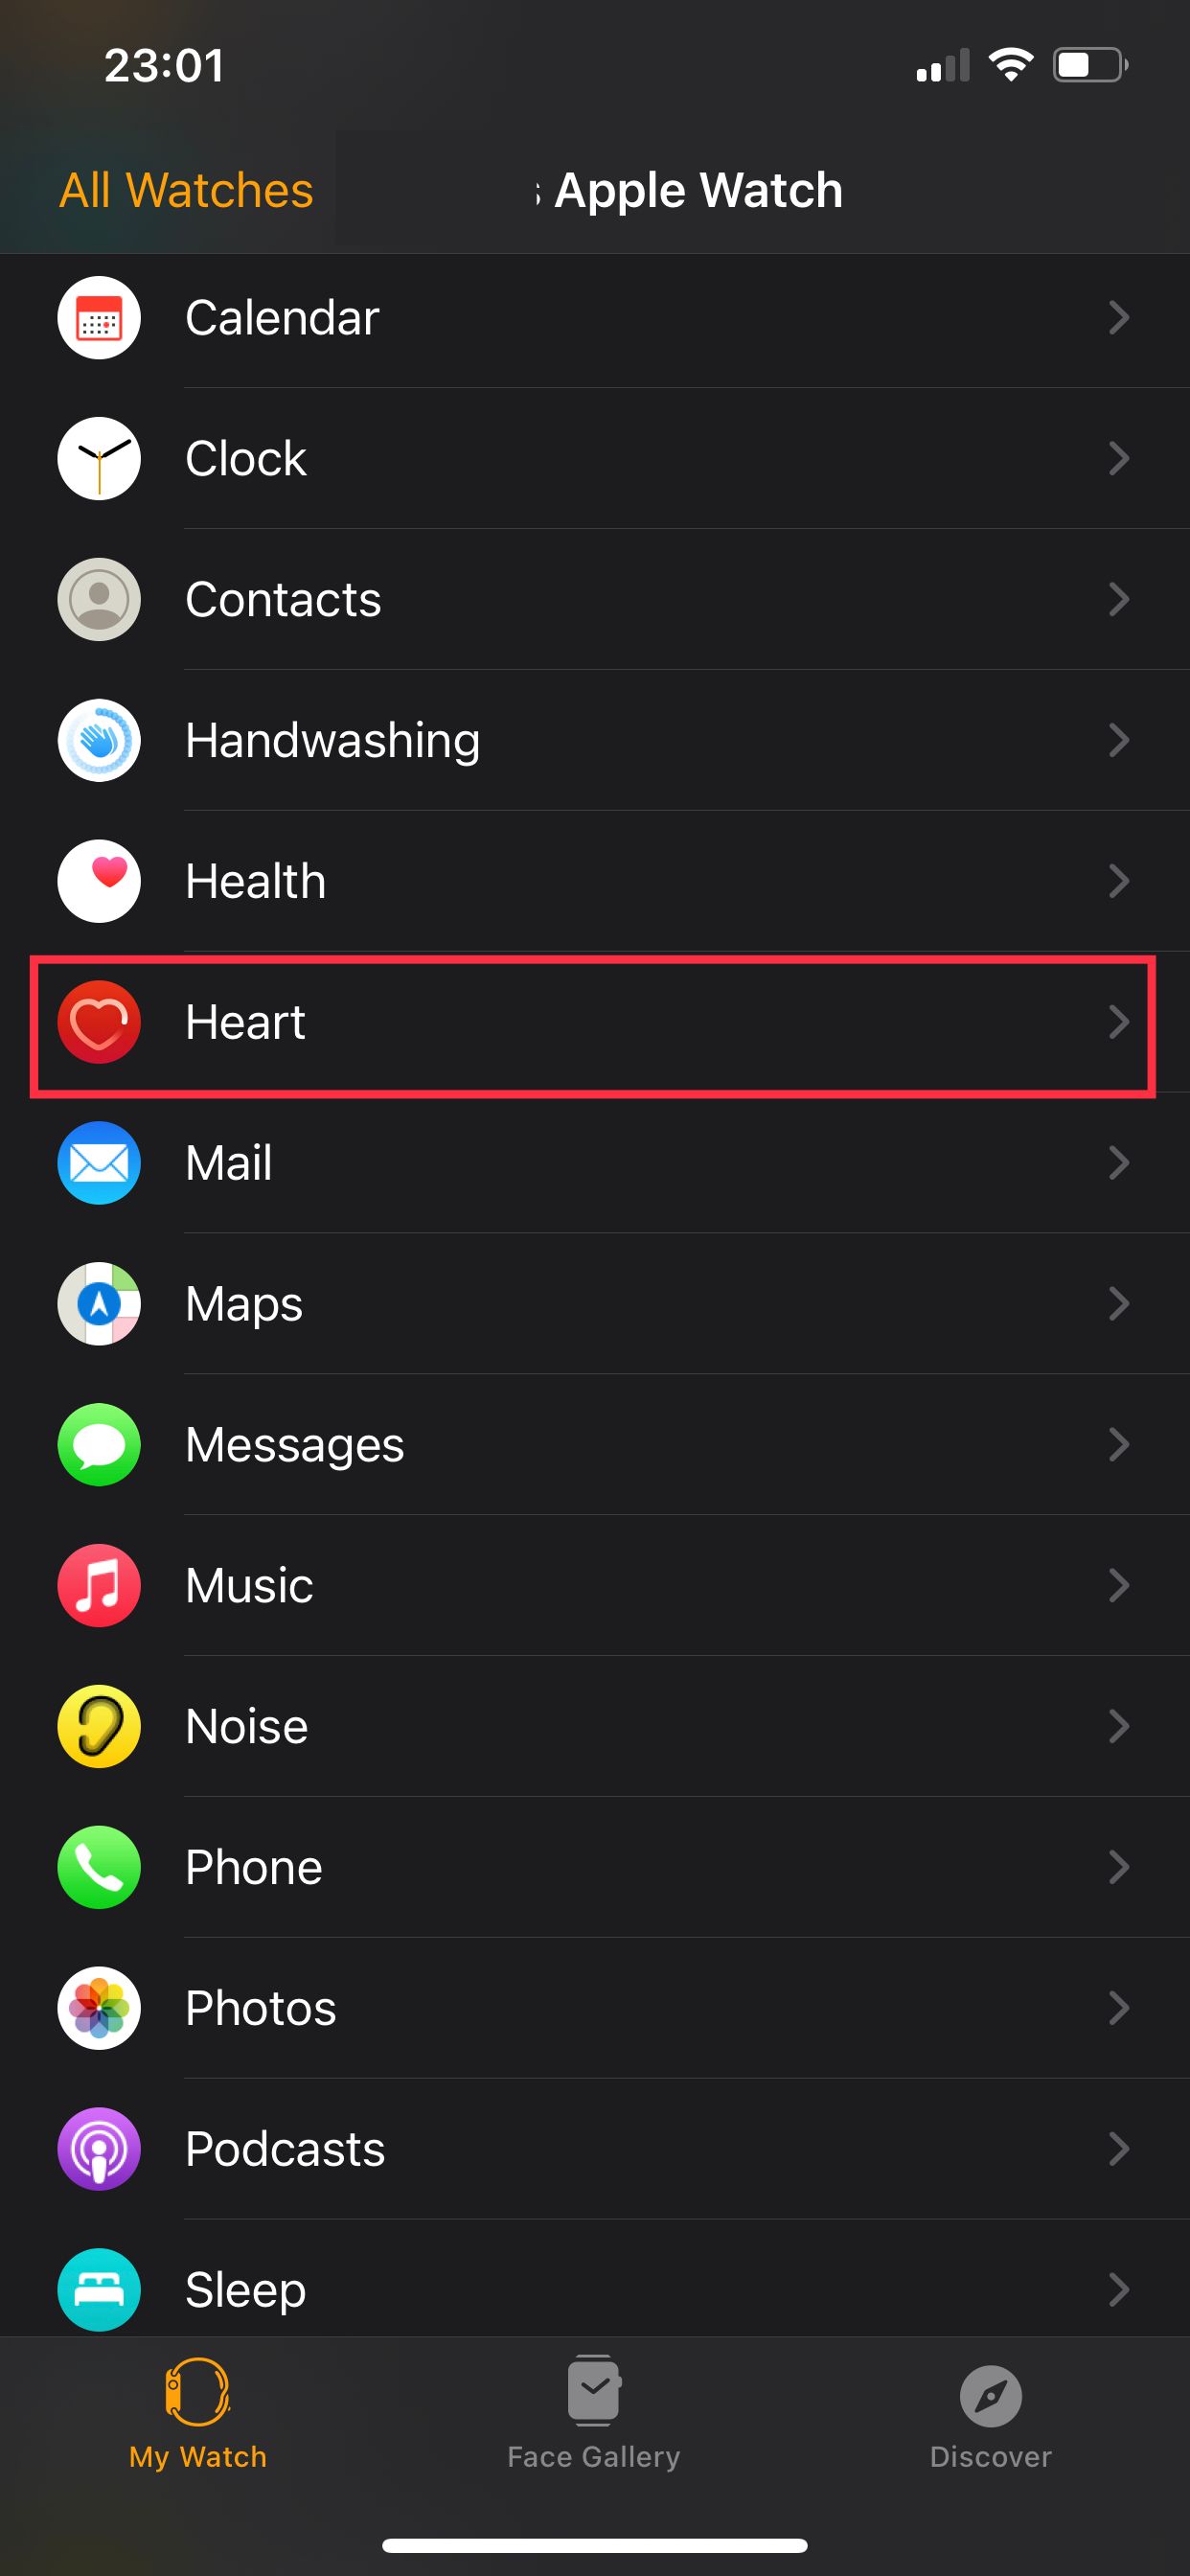 Apple Watch settings highlighting the Heart option.